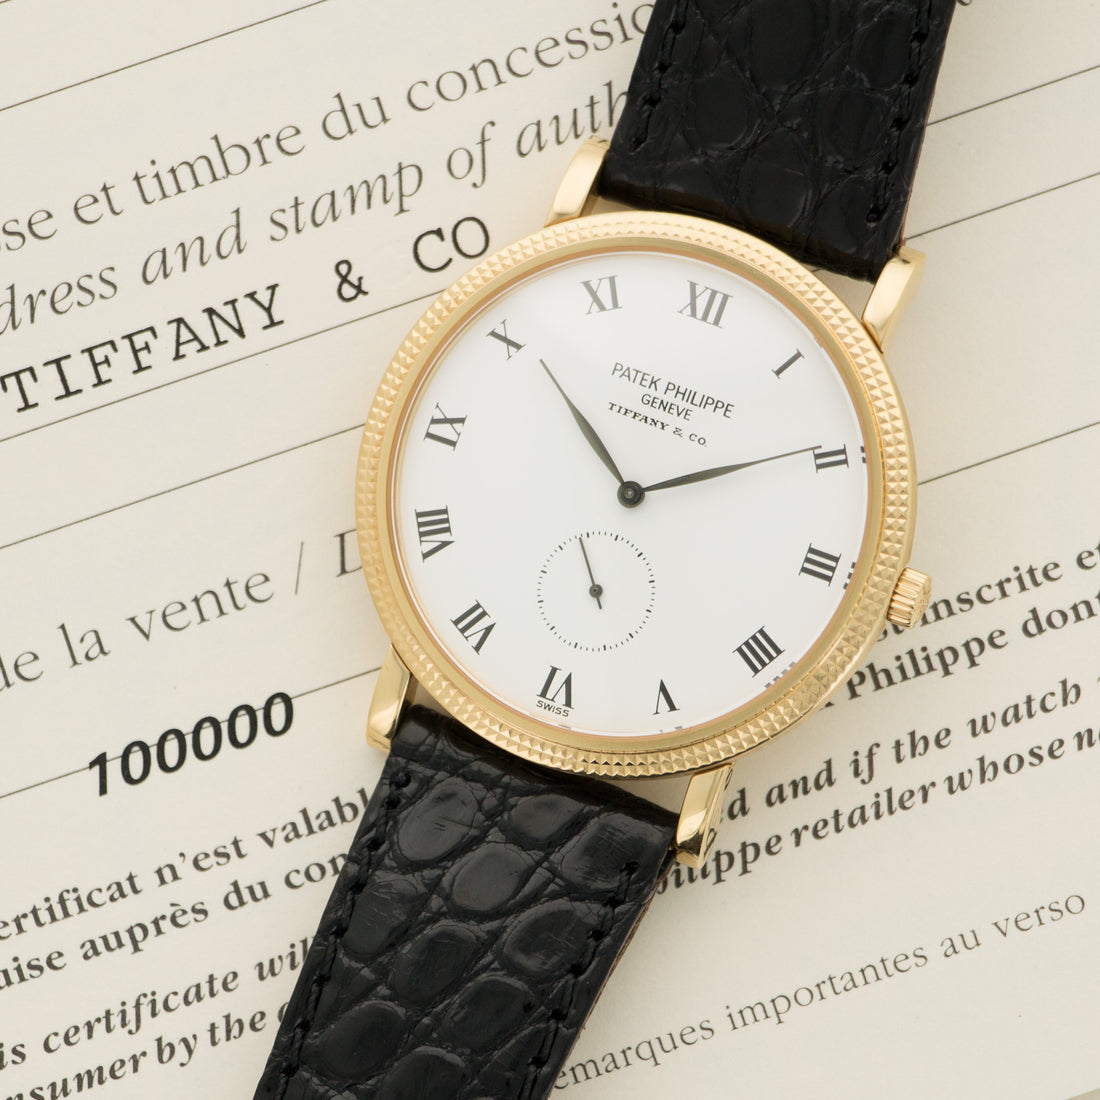 Patek Philippe Yellow Gold Calatrava Watch Ref. 3919 Retailed By Tiffany & Co.